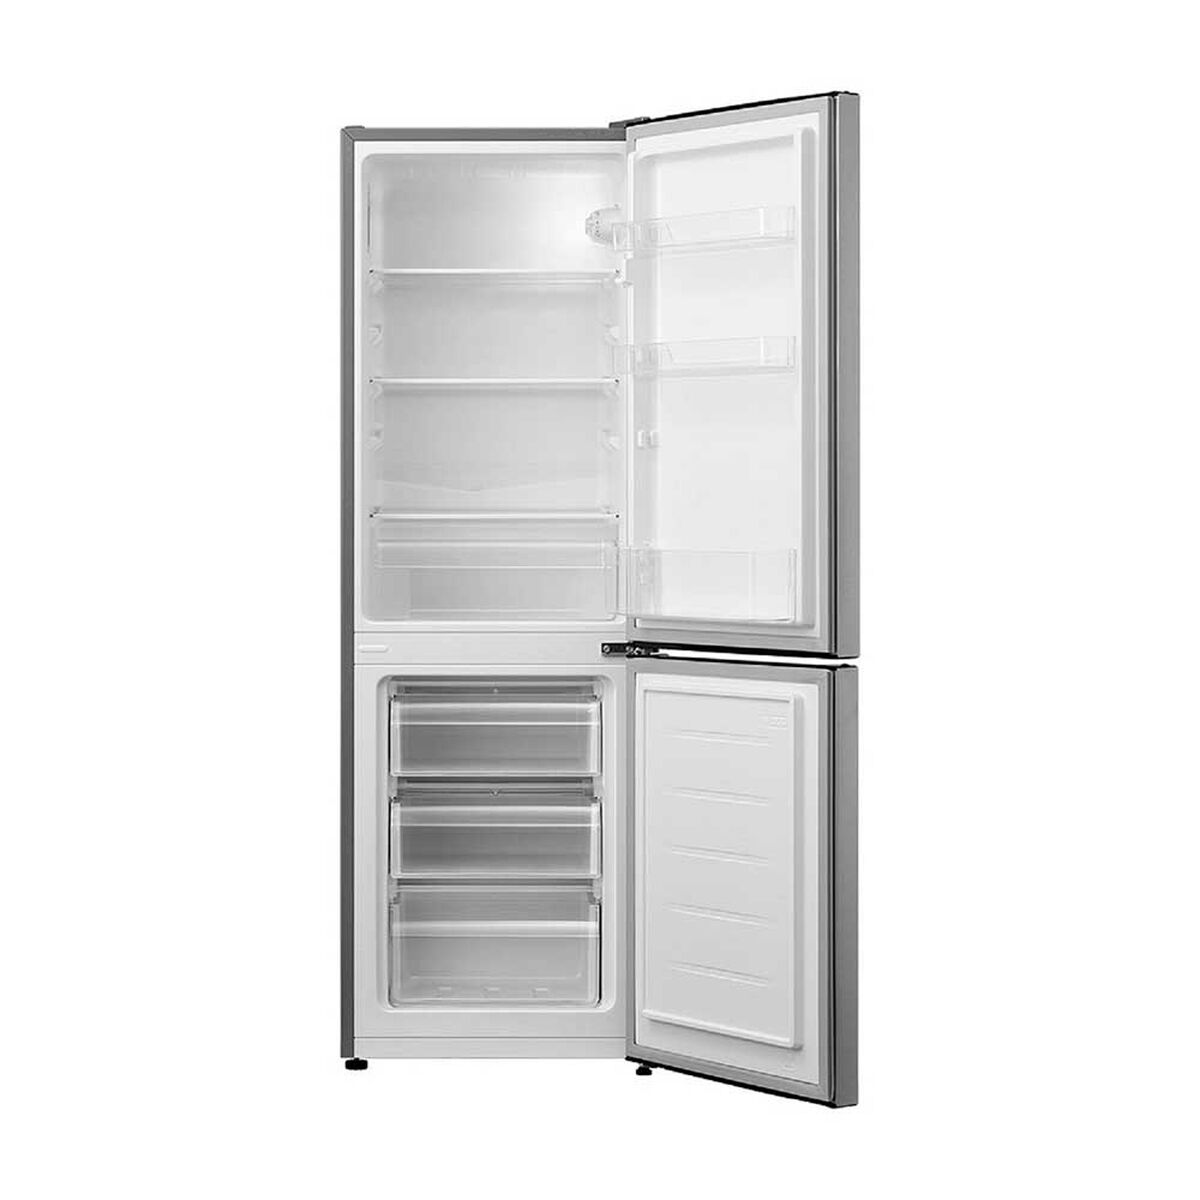 Refrigerador Frío Directo Libero LRB-180DFI 157 lts.